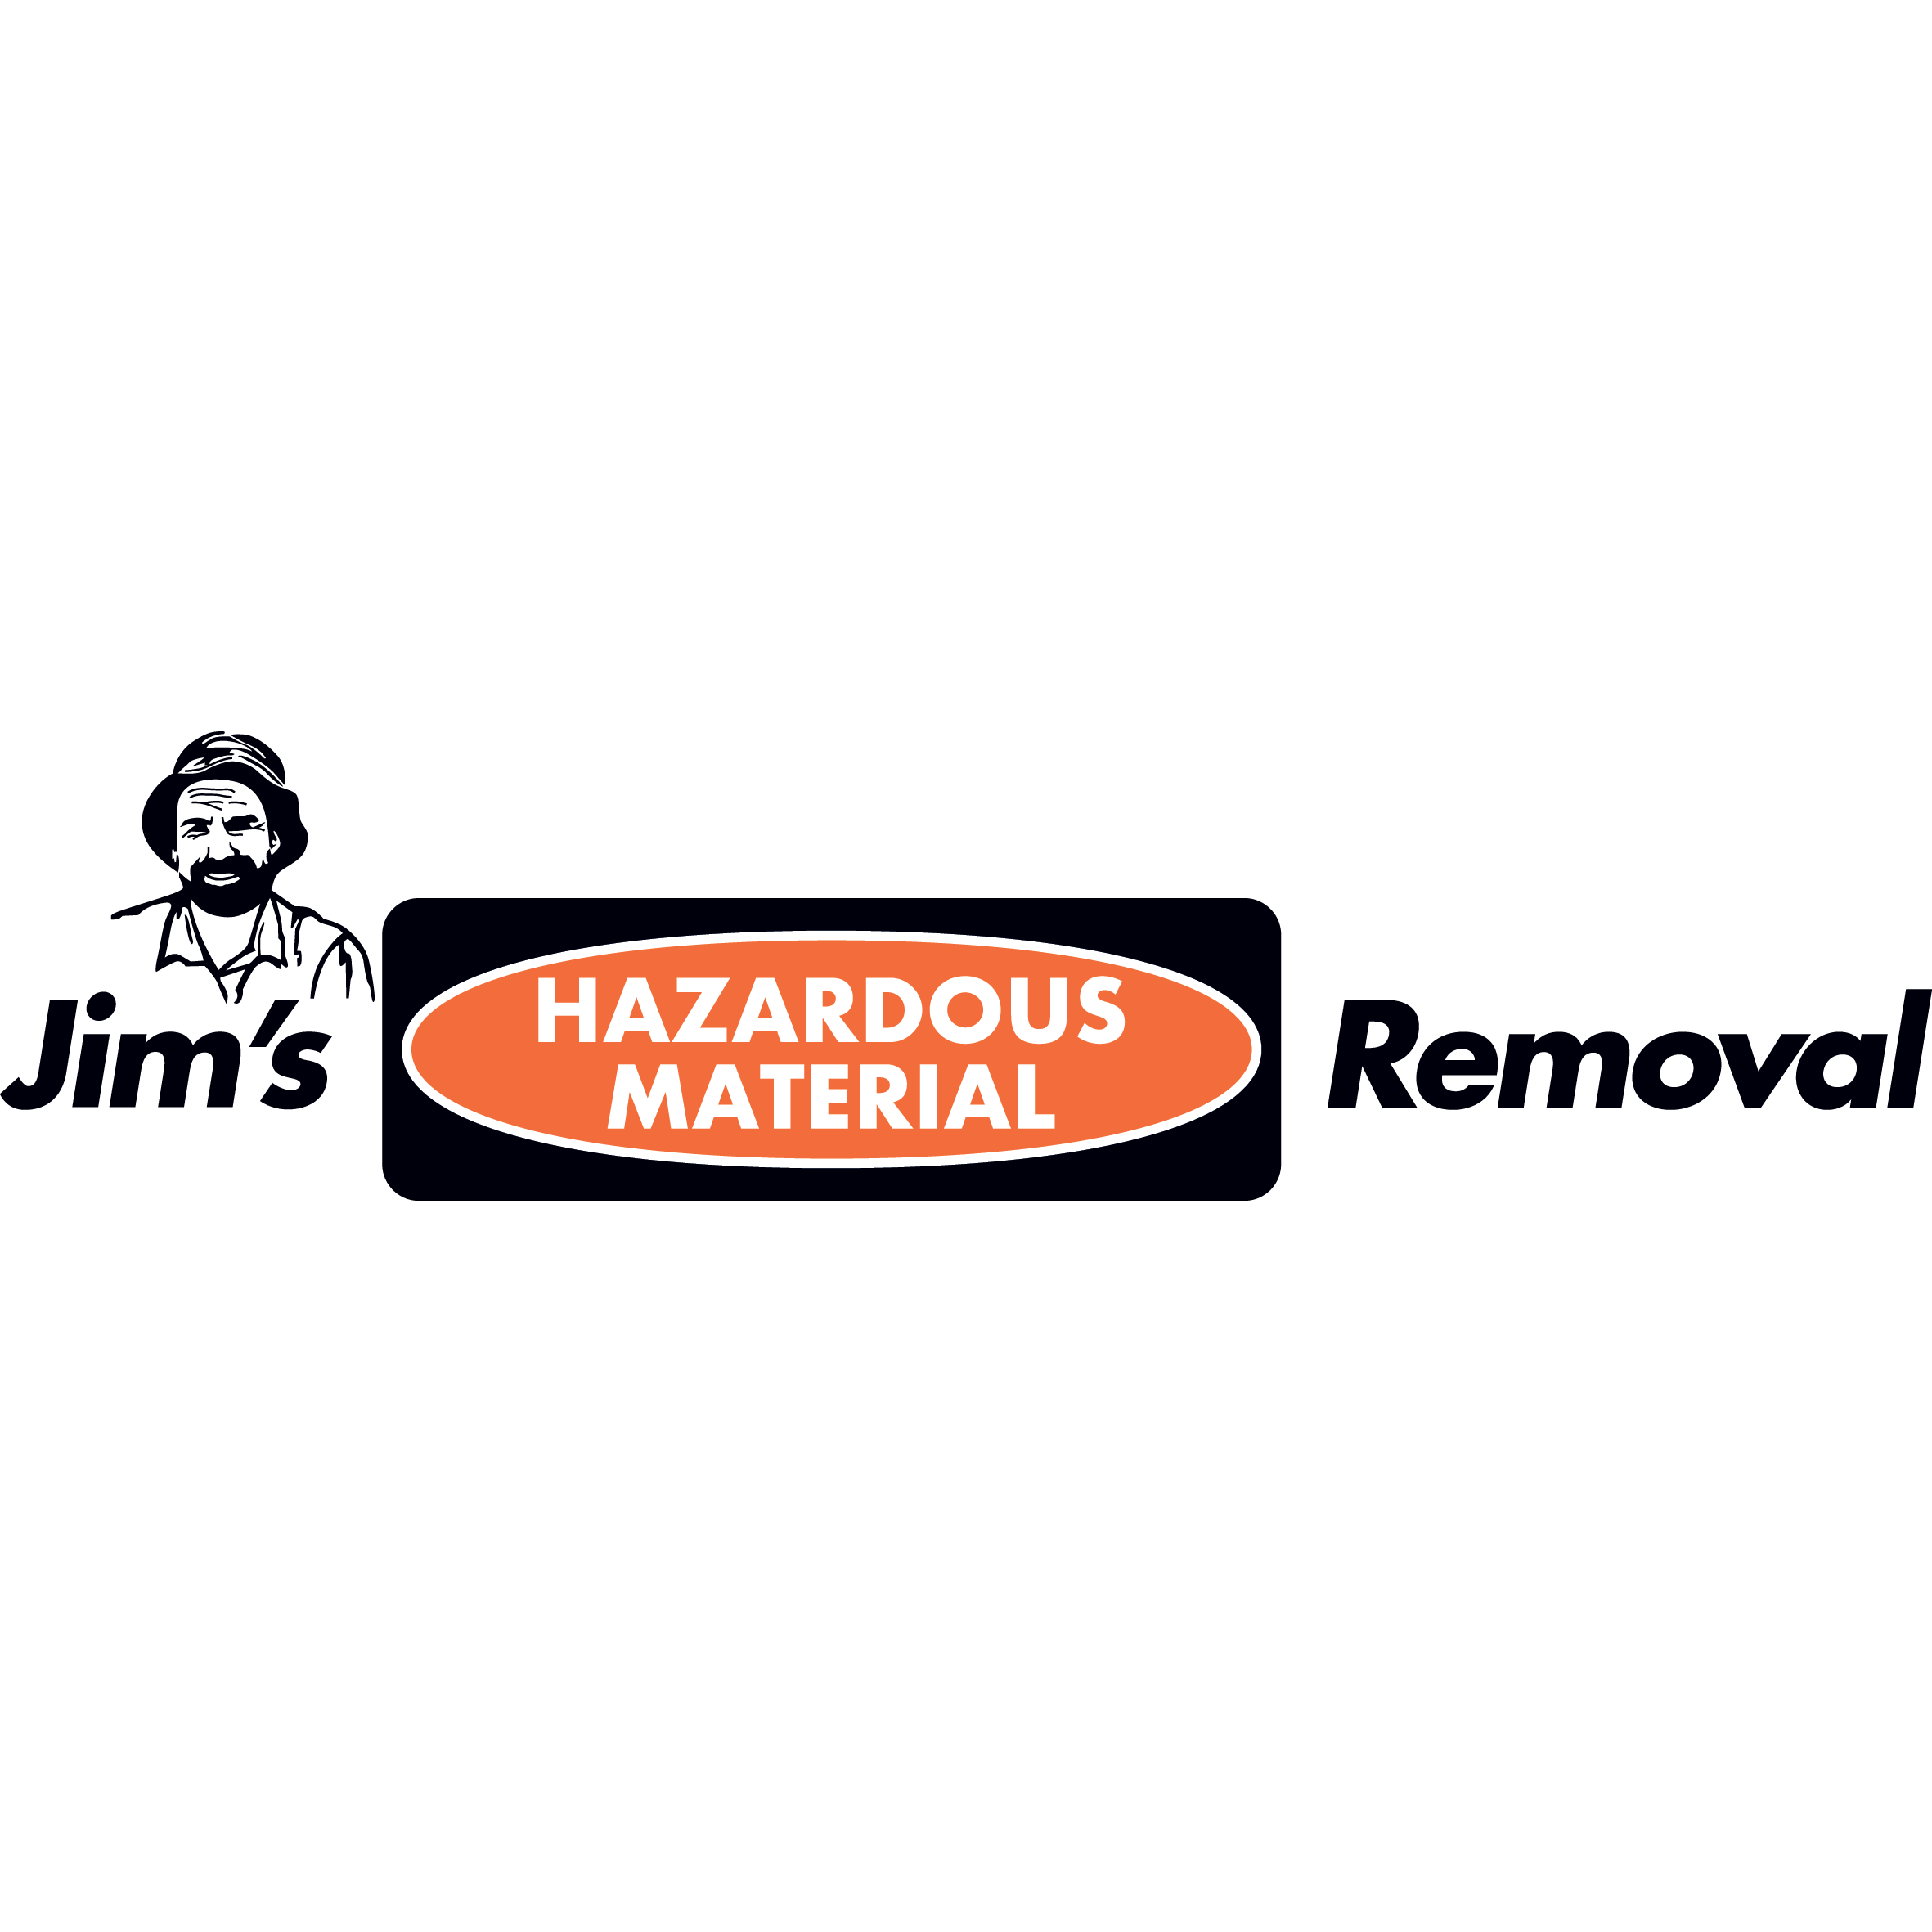 Jim's Hazardous Material Removal Clyde Melbourne